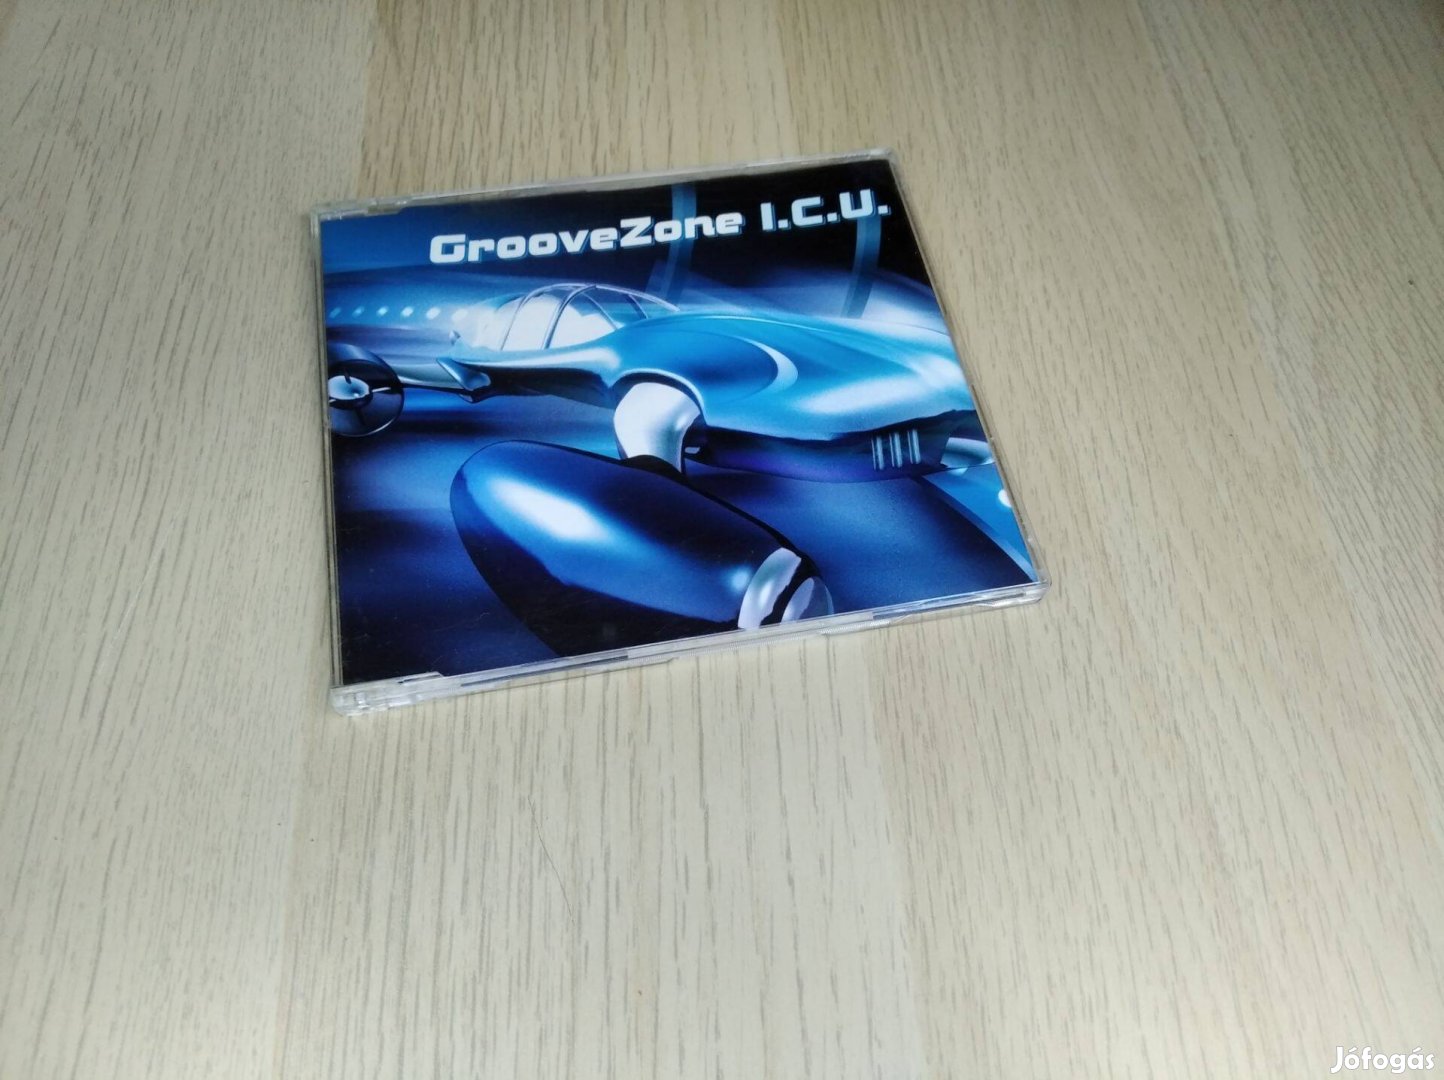 Groovezone - I.C.U. / Maxi CD 1998